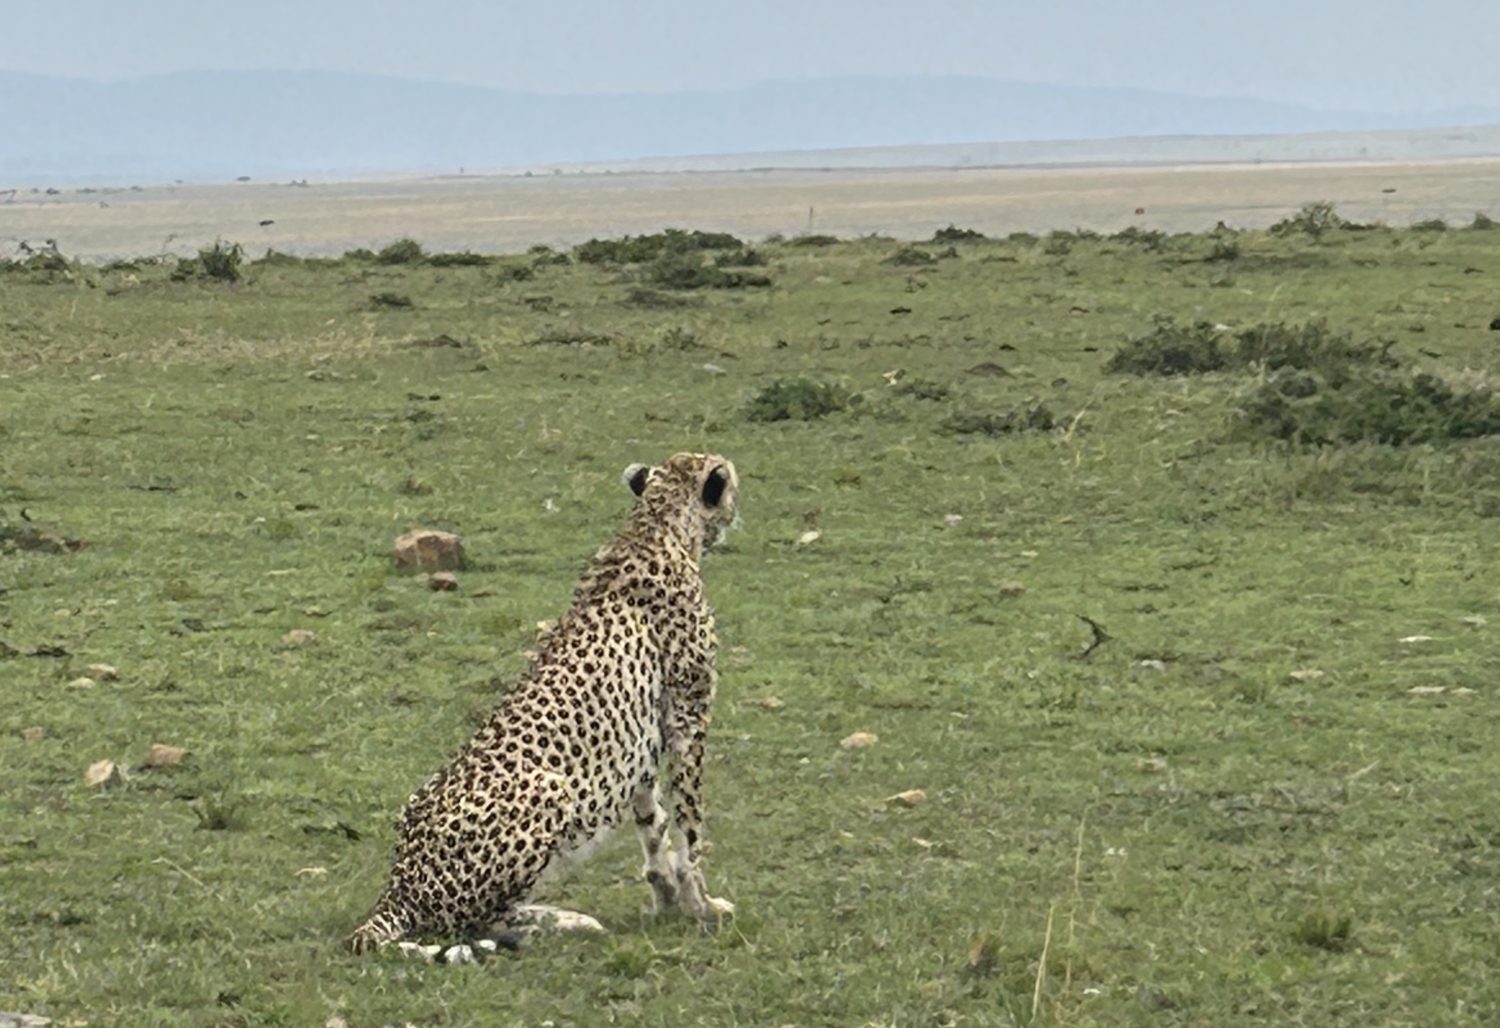 A cheetah sitting in a grassy field